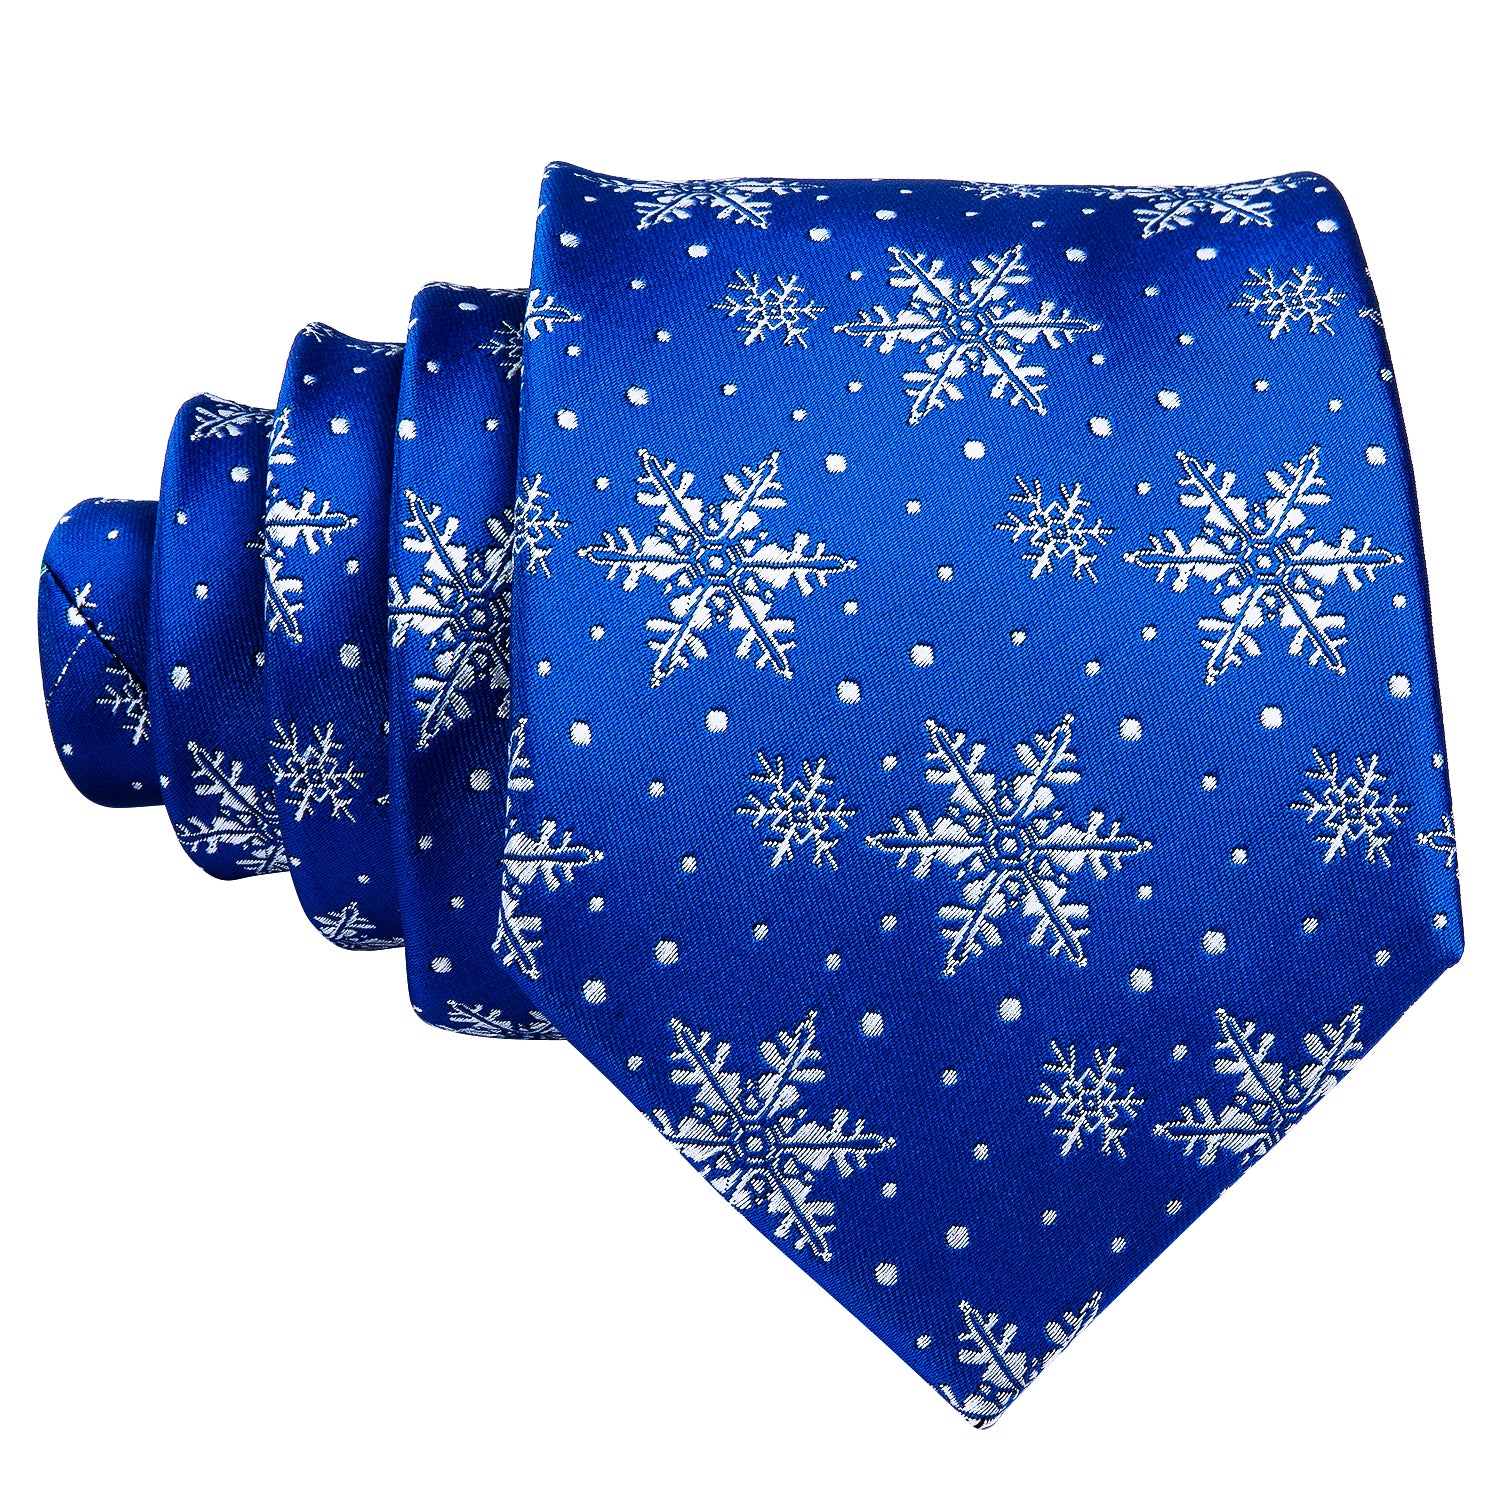 Barry Wang Blue TIe White snowflake men's necktie 